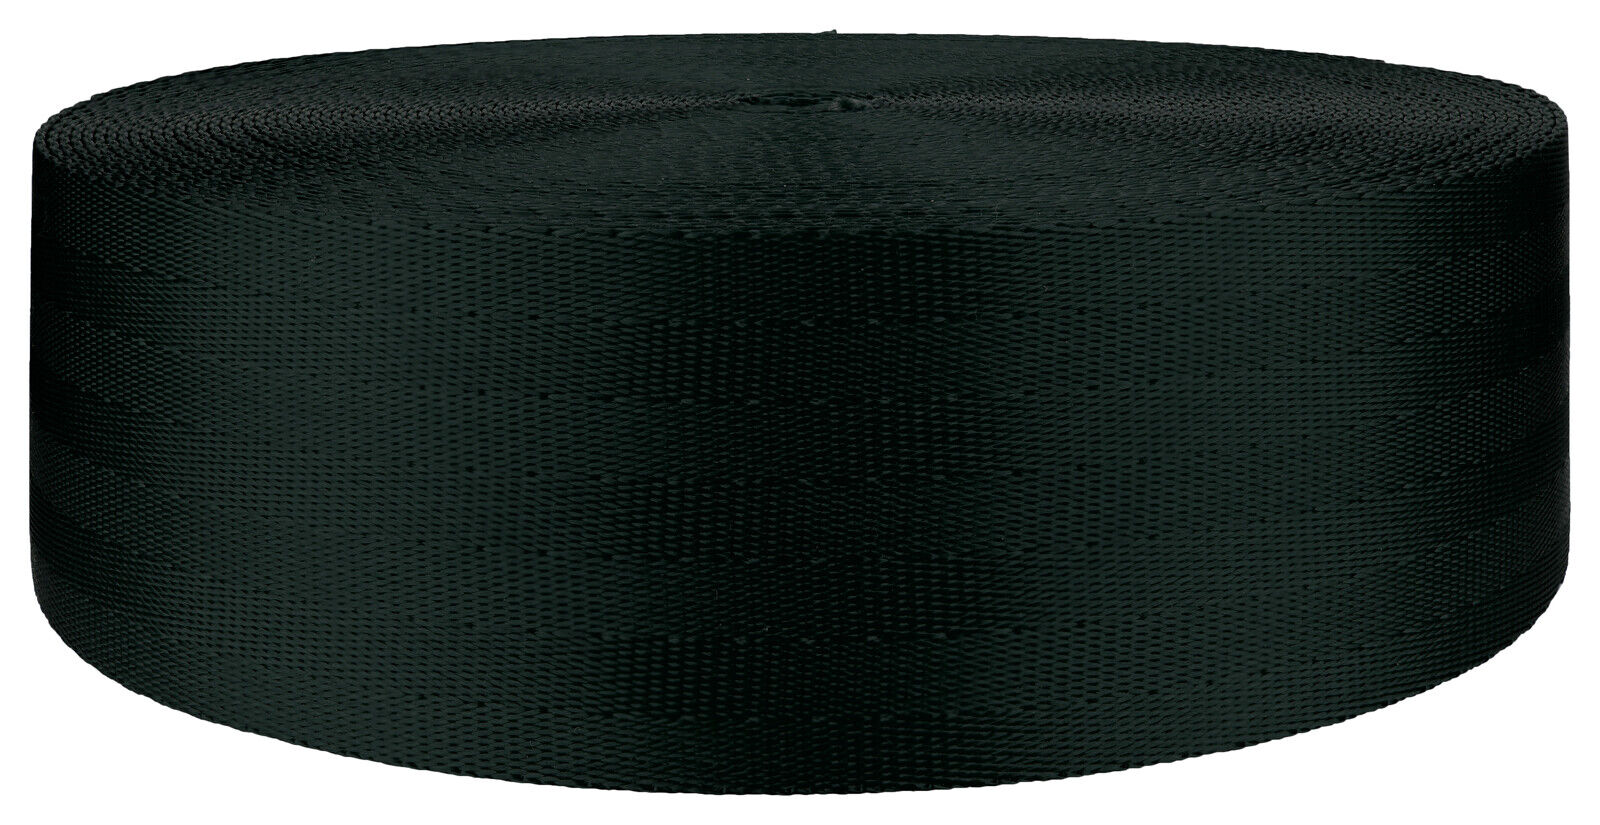 2 Inch Seat-Belt Dark Green Polyester Webbing Closeout, 20 Yards